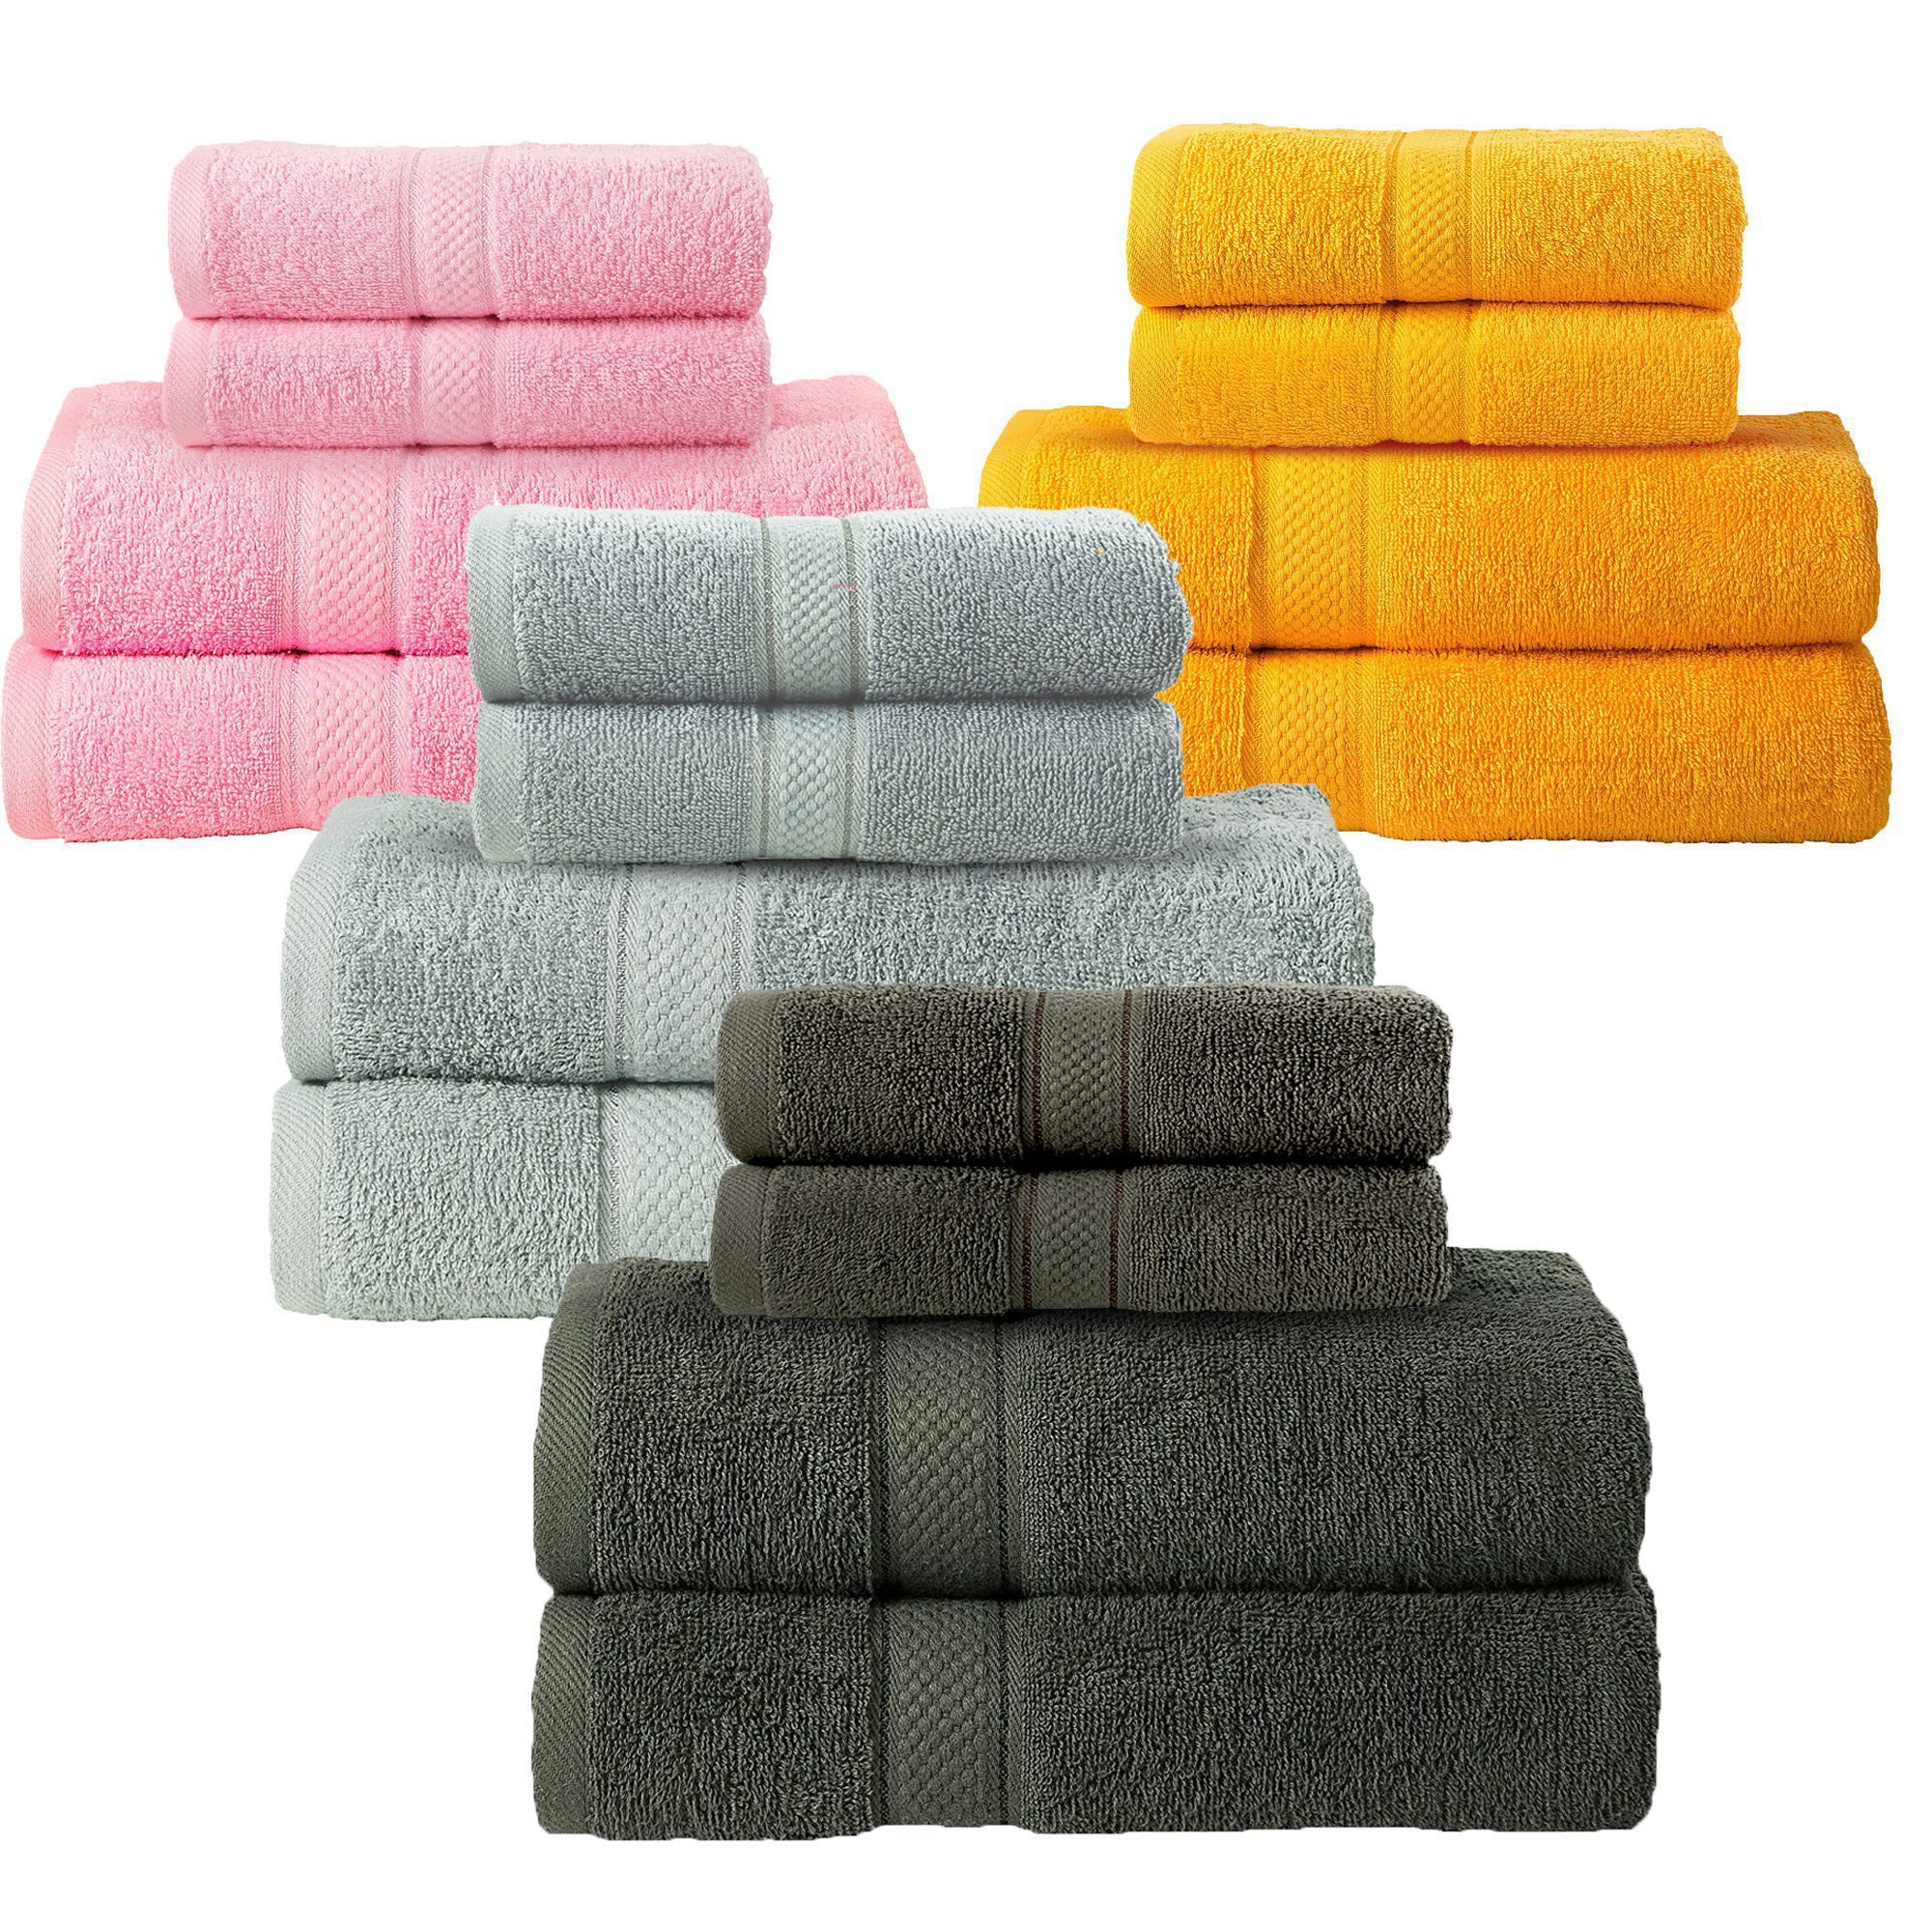 Dish Towels 4 Pcs. Kitchen Towel Soft and Absorbent Cotton Plaid